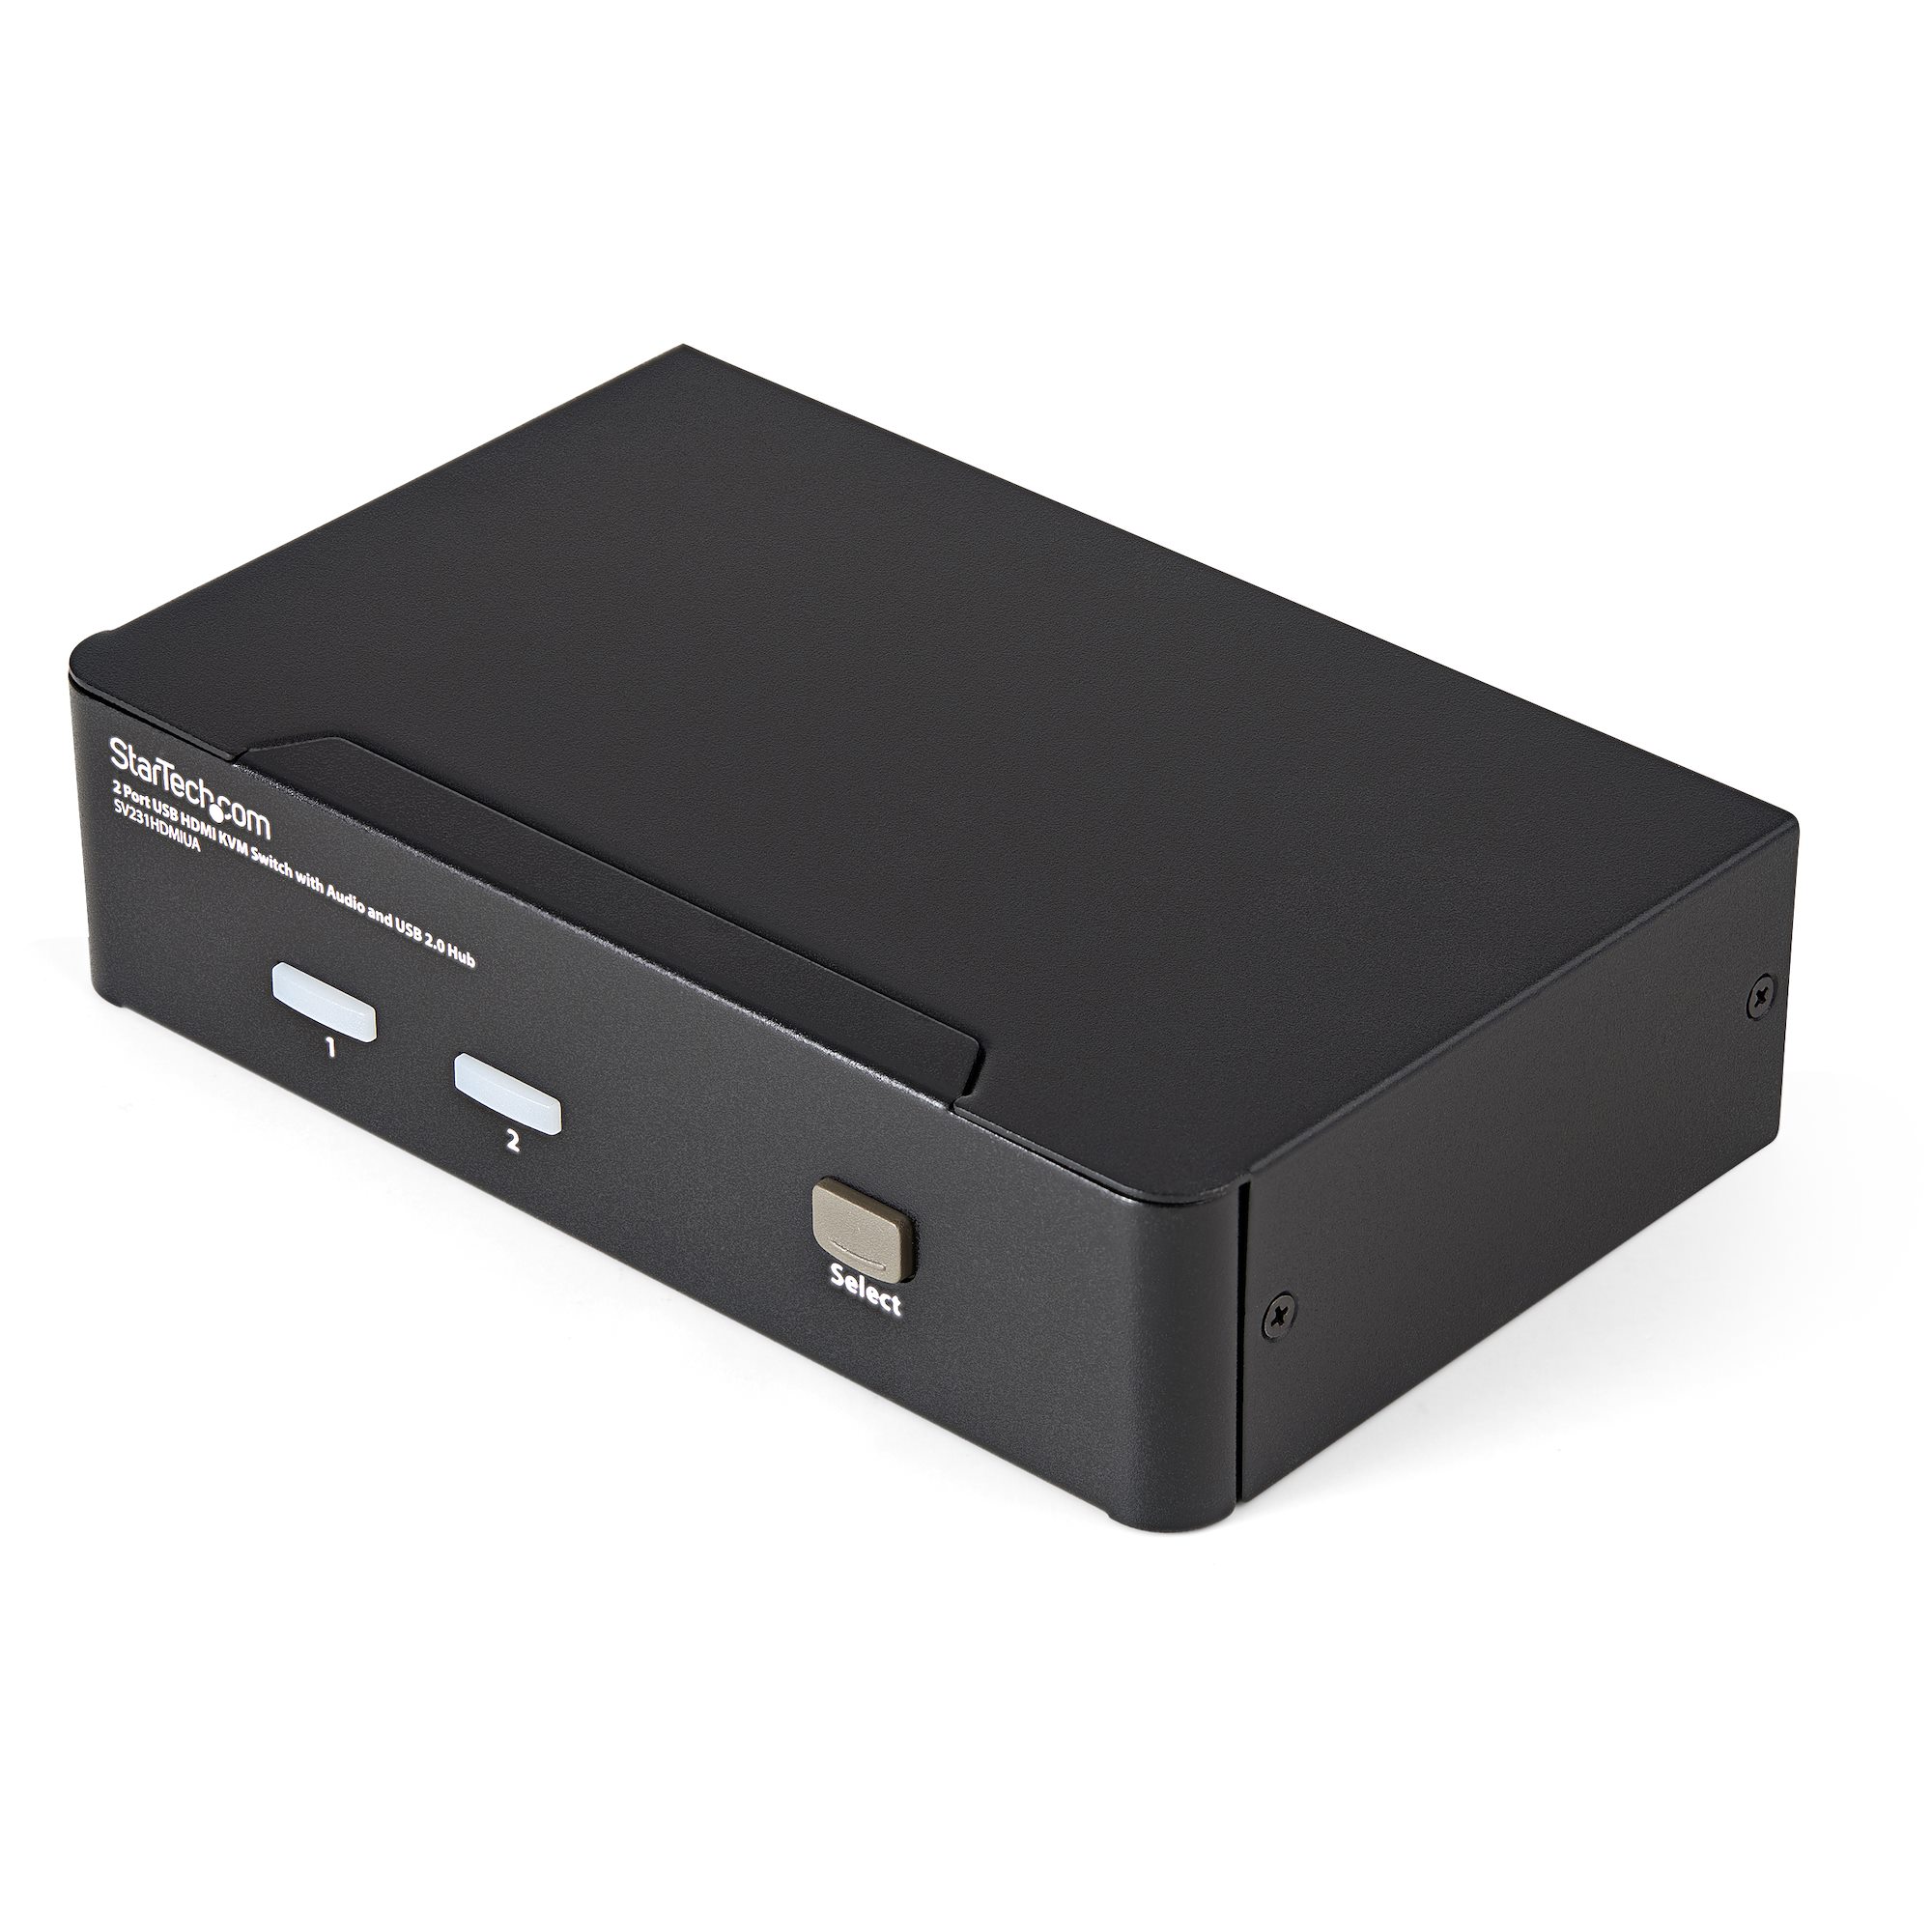 StarTech SV231HDMIUA 2 Port USB HDMI KVM Switch w/ Audio & USB 2.0 Hub 